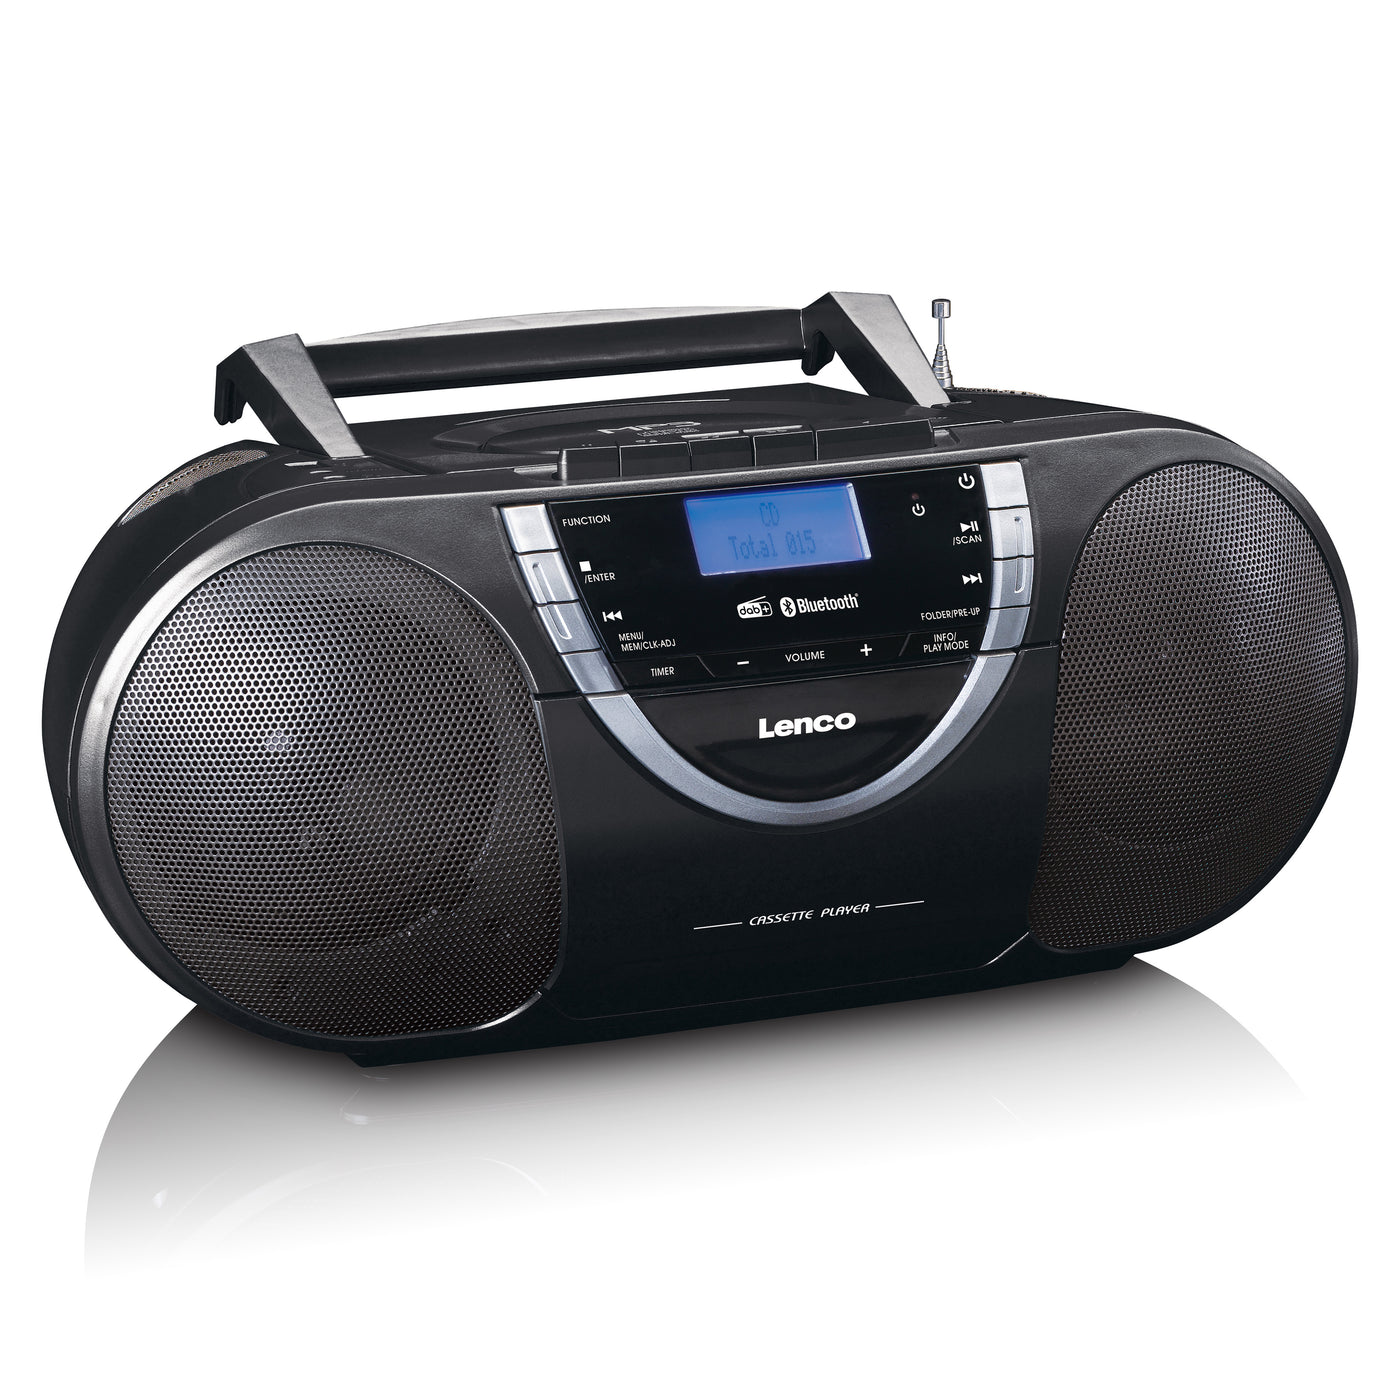 - Lenco-Catalog radio MP3 LENCO – - with player CD/ Bl and DAB+, Boombox FM SCD-6900BK